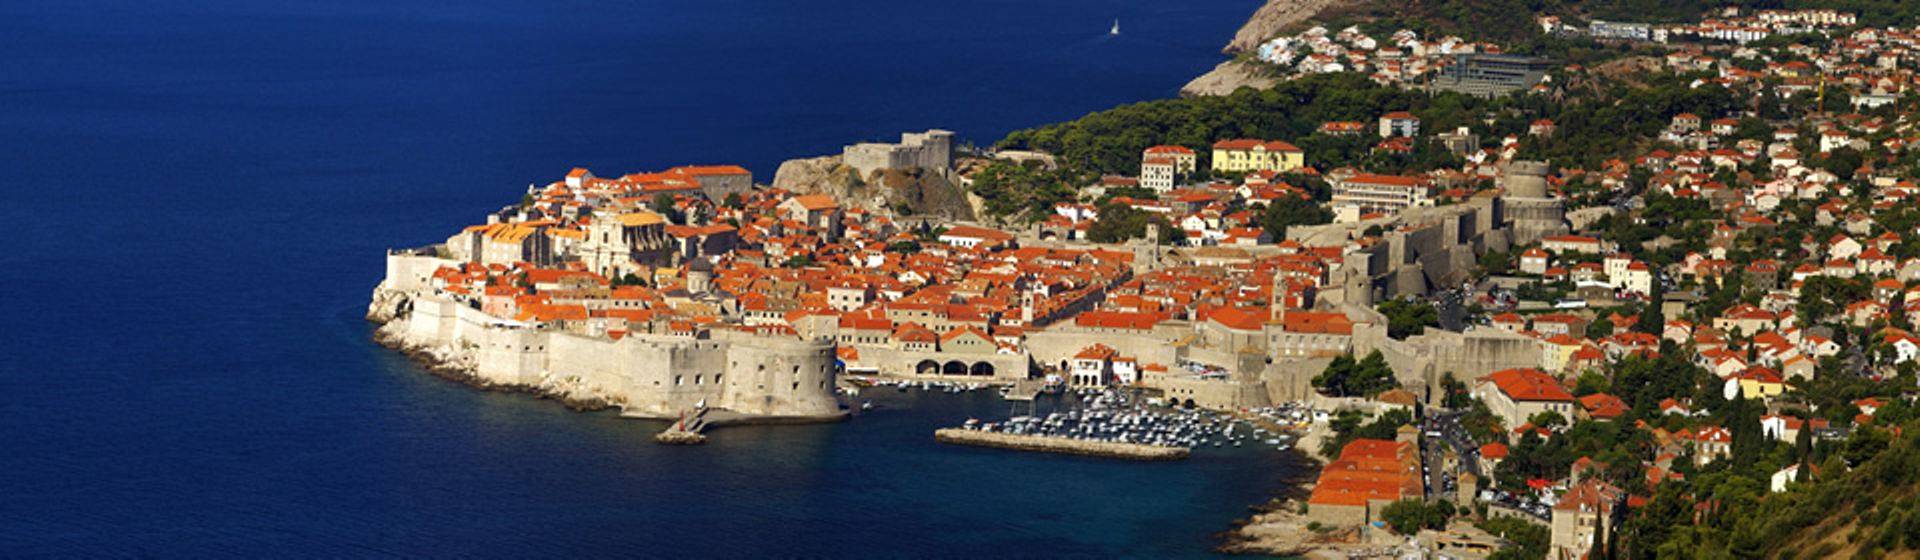 Holidays to Dubrovnik Image